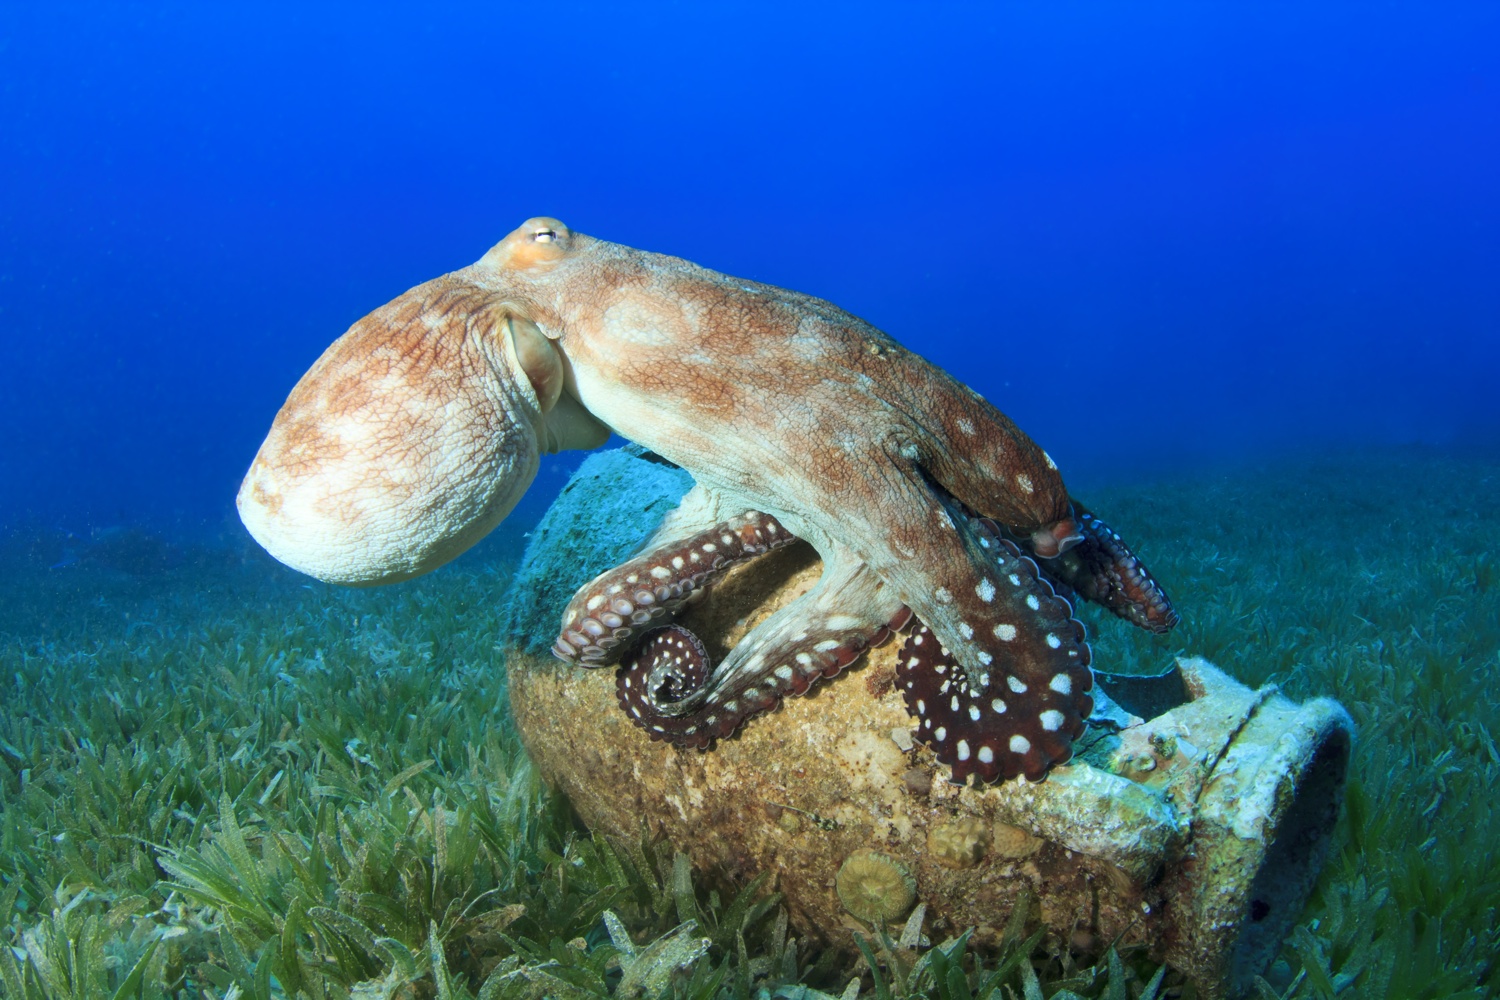 Octopus, from Shutterstock